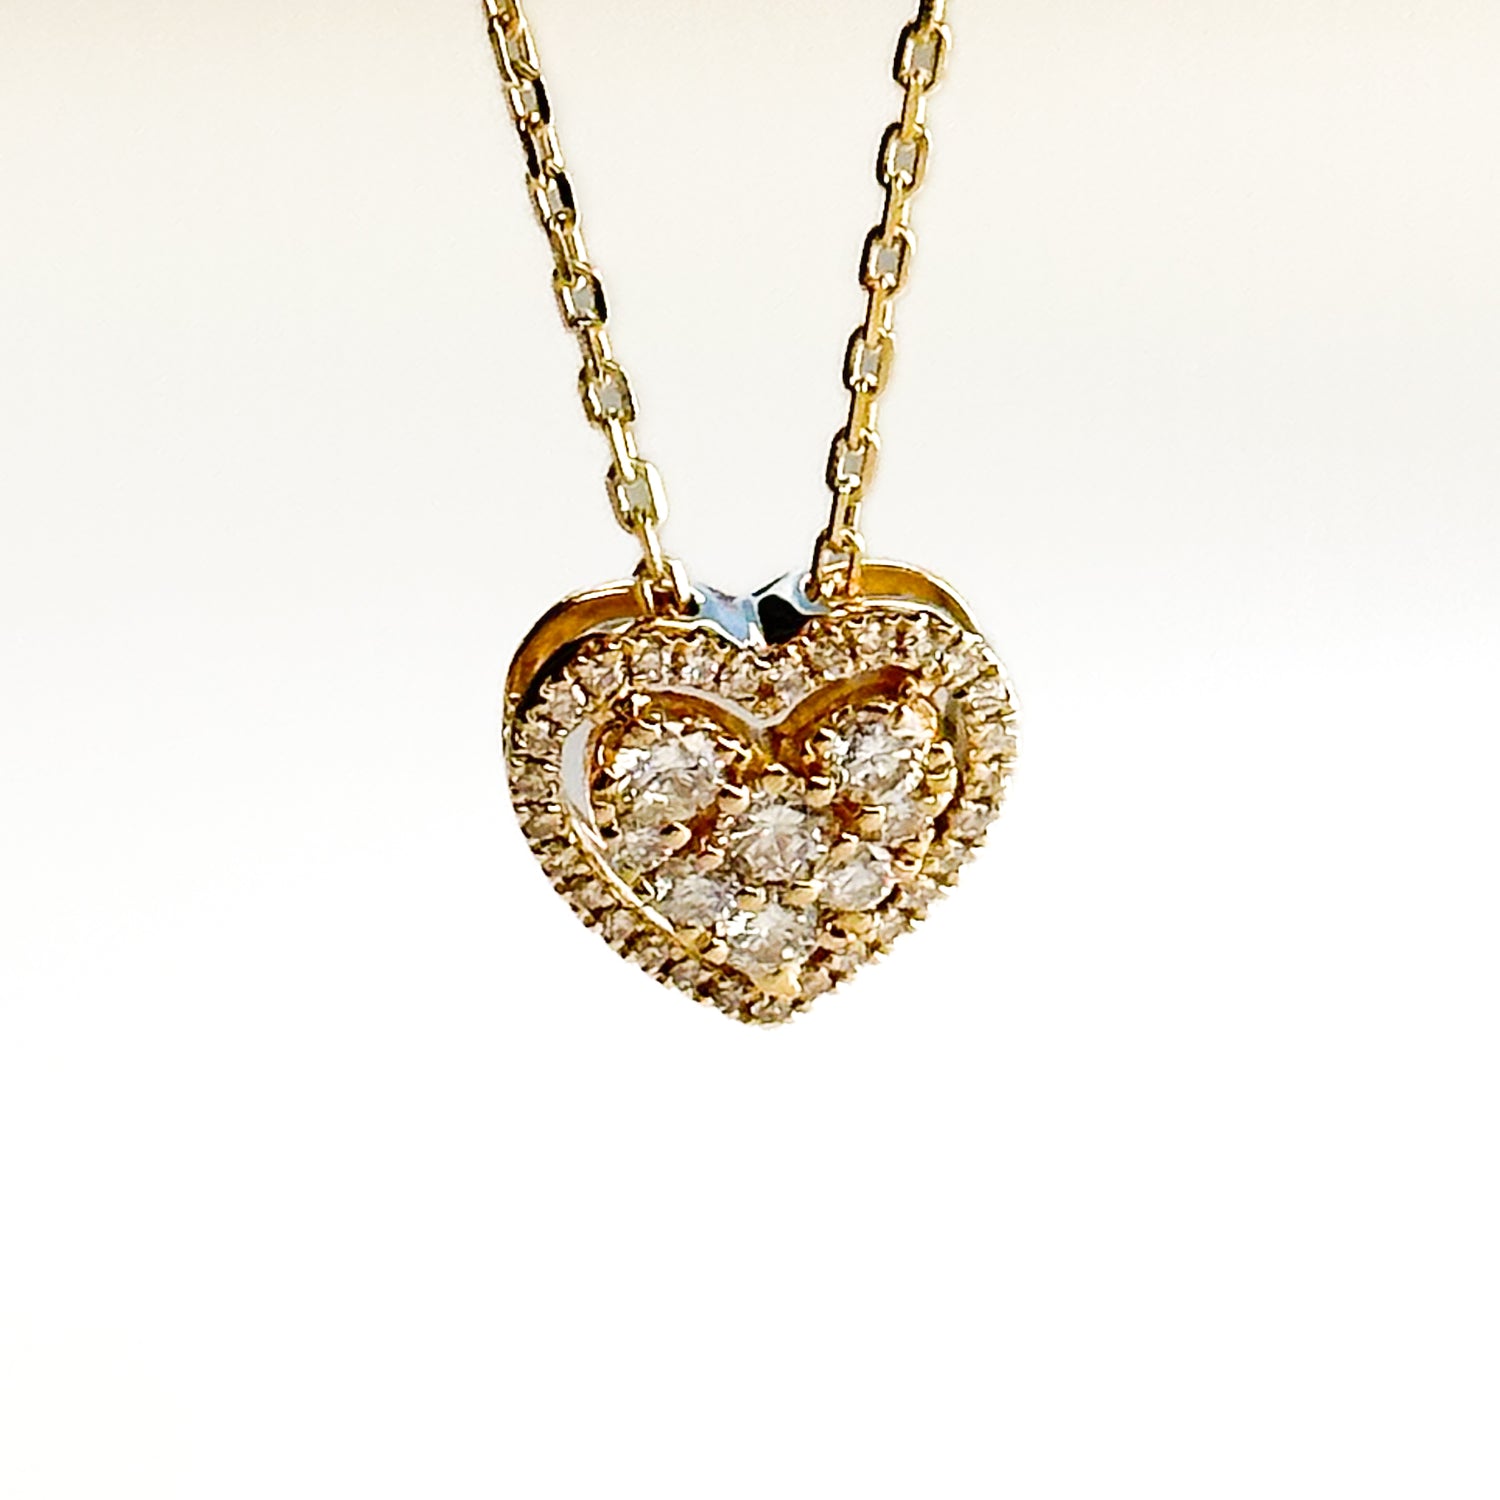 Gold Heart Pendant with Diamonds